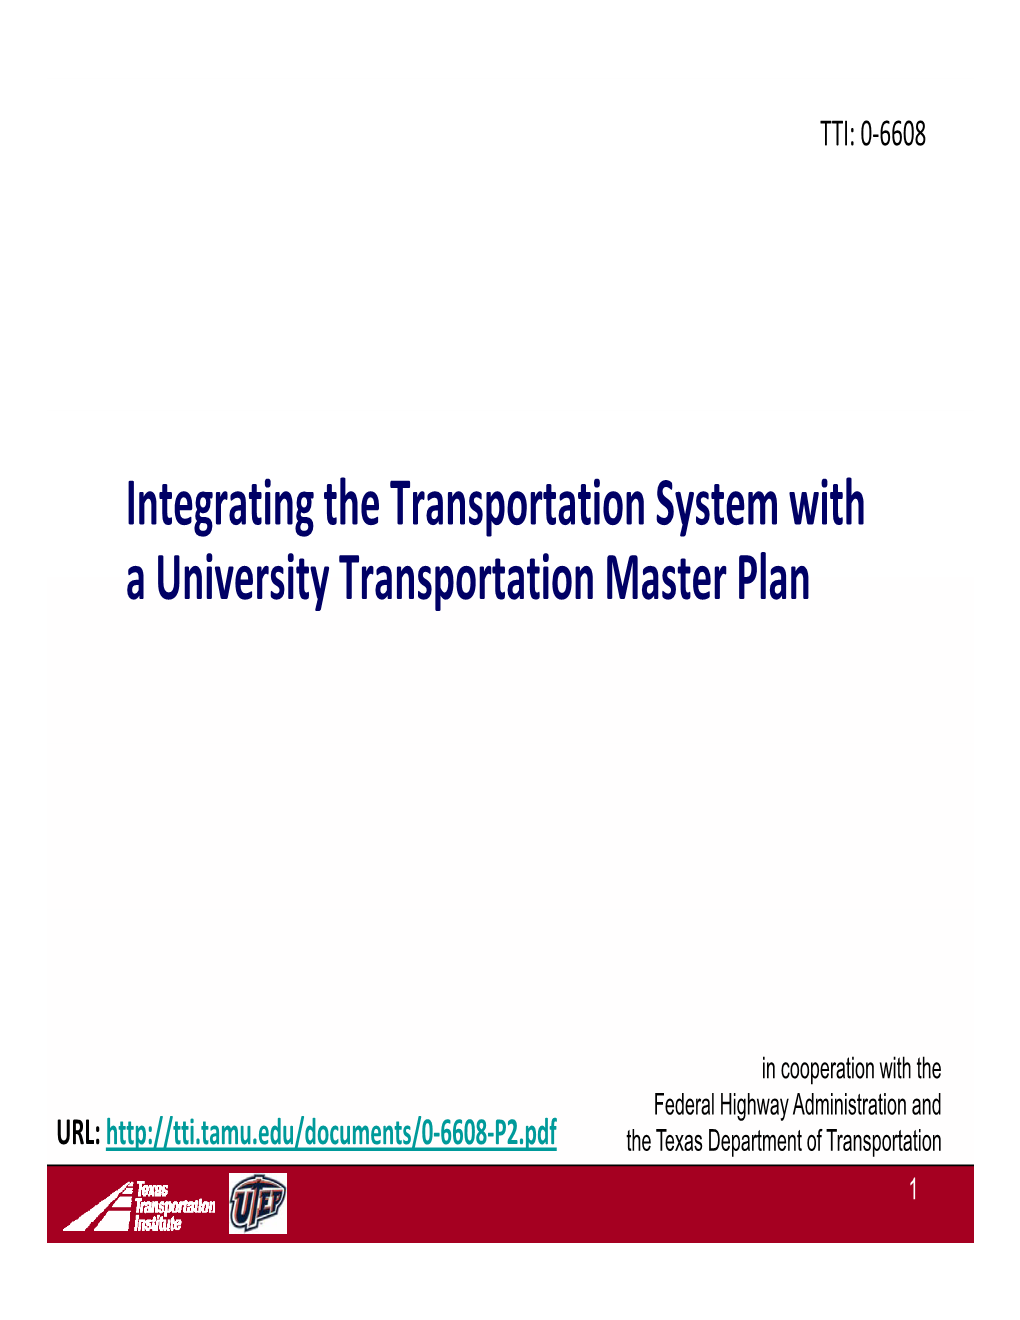 Integrating the Transportation System with a University Transportation Master Plan